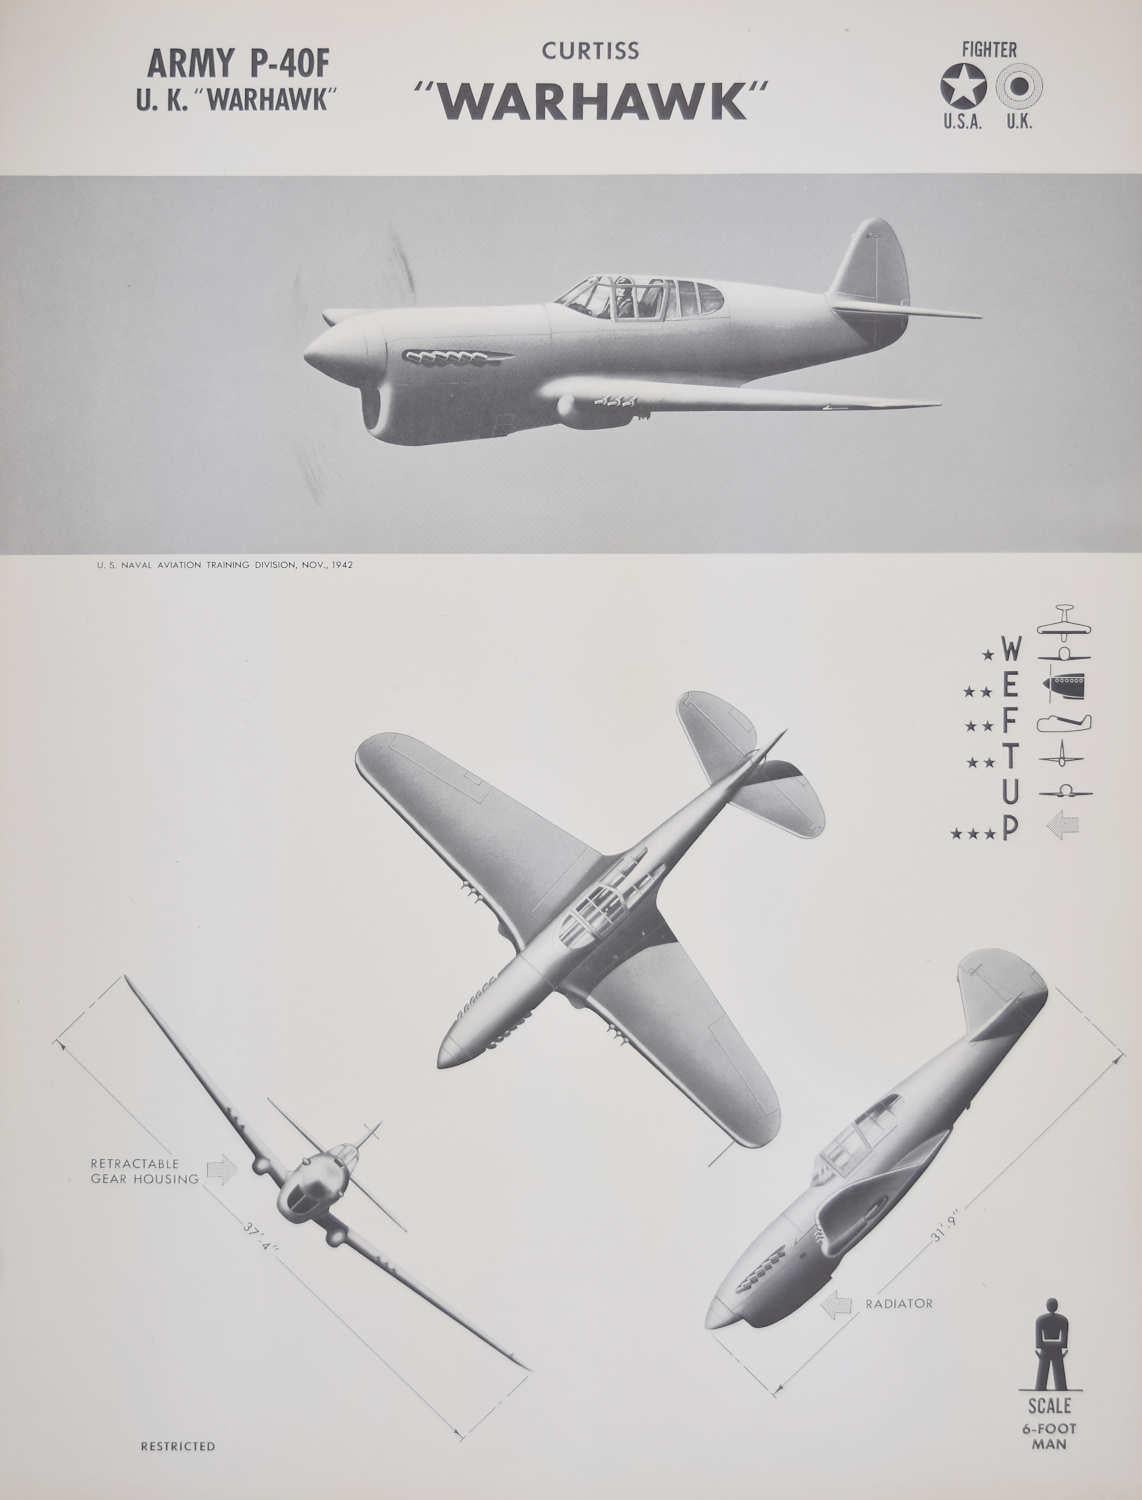 1942 Curtiss P-40 "Warhawk" fighter plane aeroplane identification poster WW2 - Print by Unknown